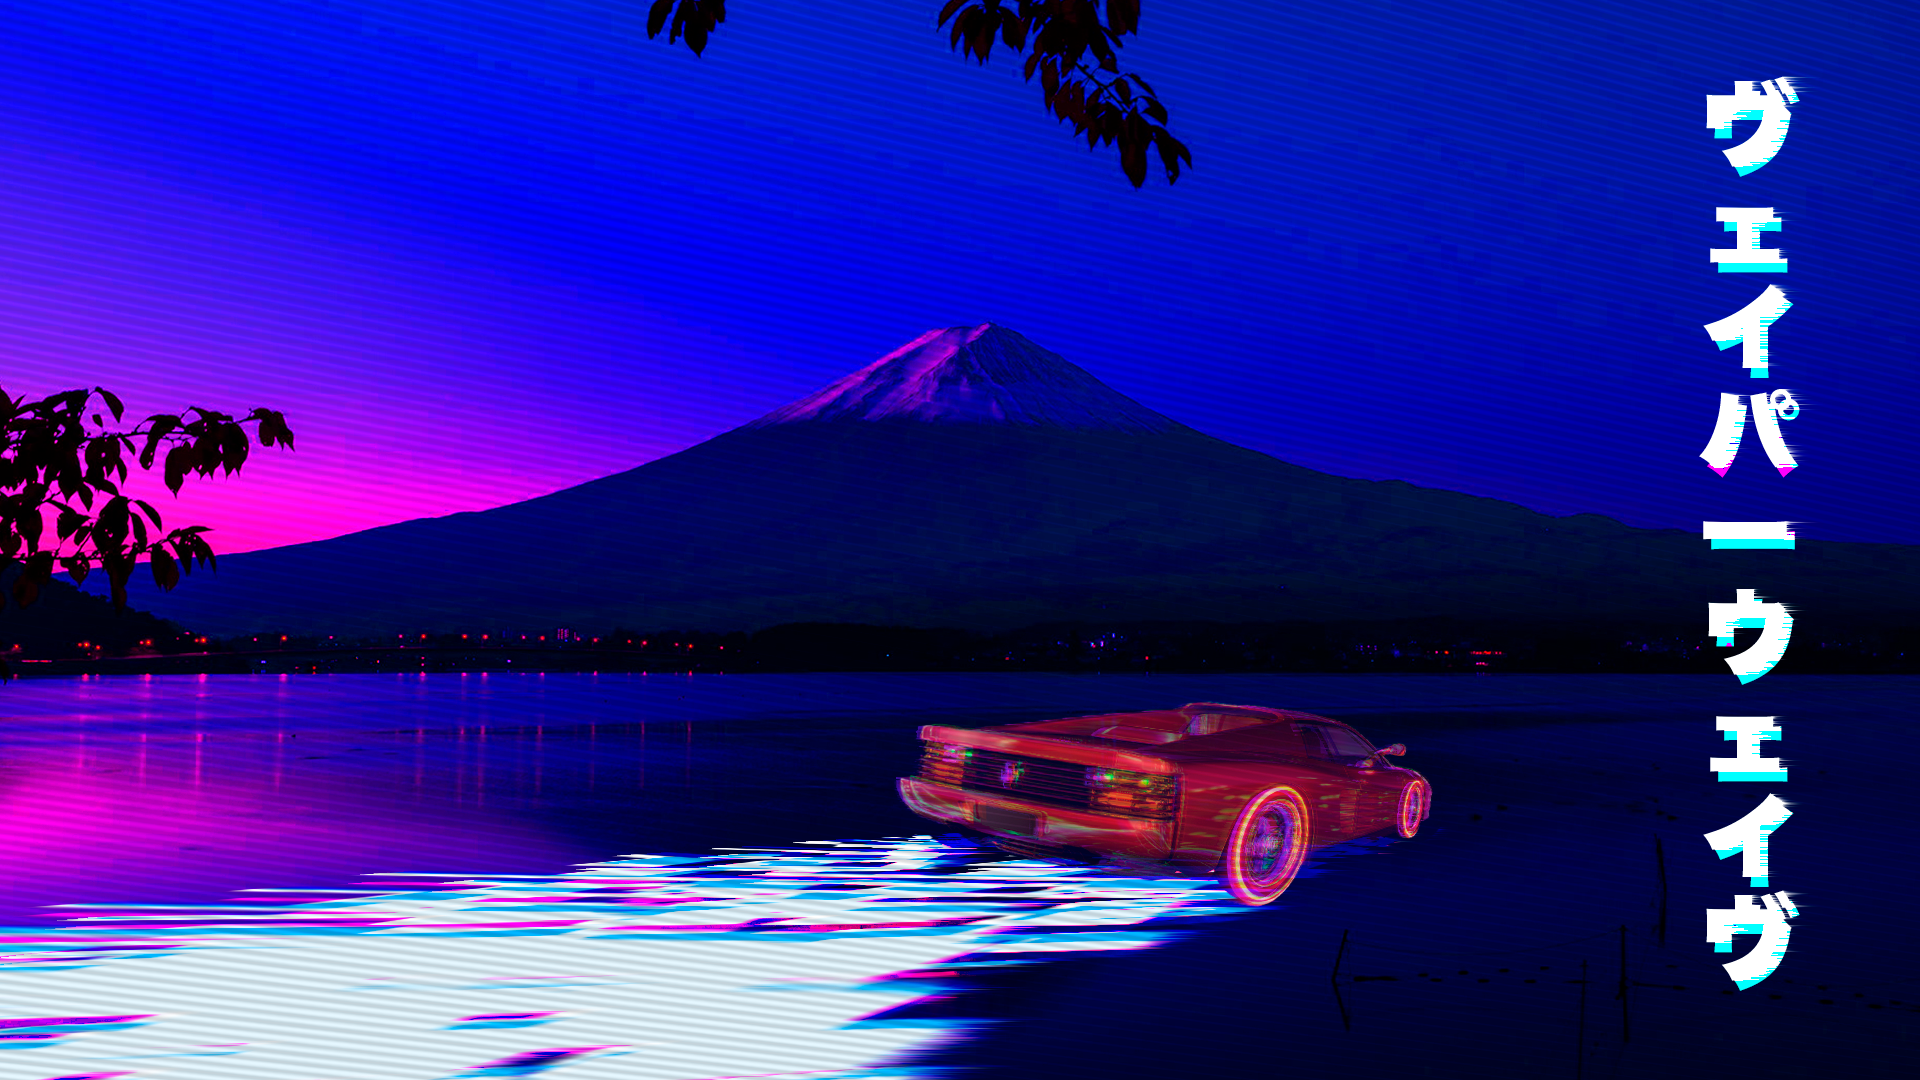 vaporwave live wallpaper,purple,sky,vehicle,car,reflection